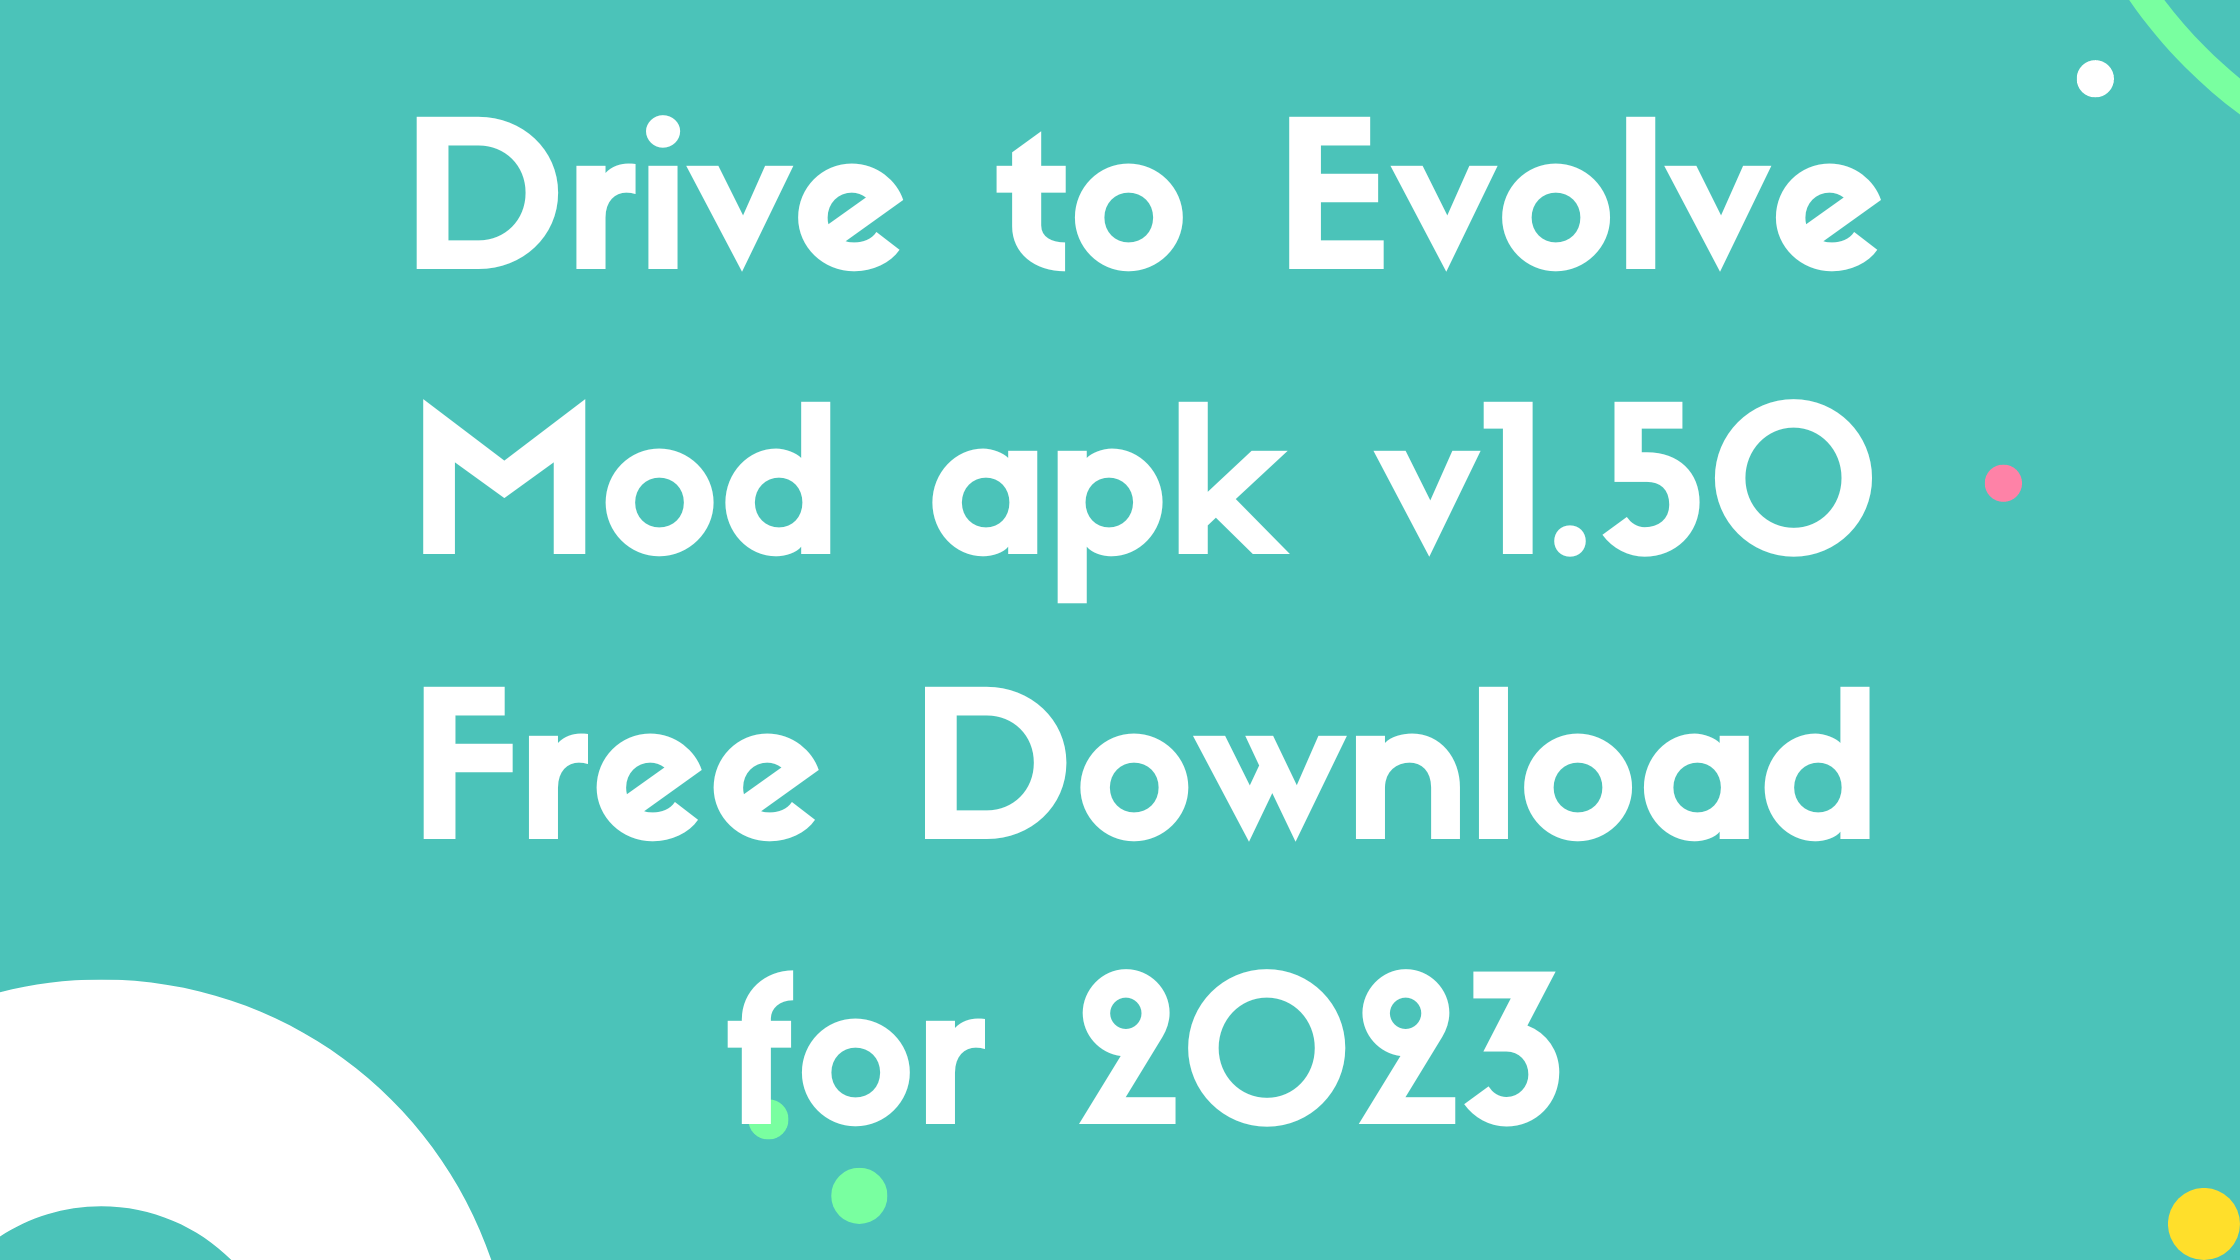 Drive to Evolve Mod apk v1.50